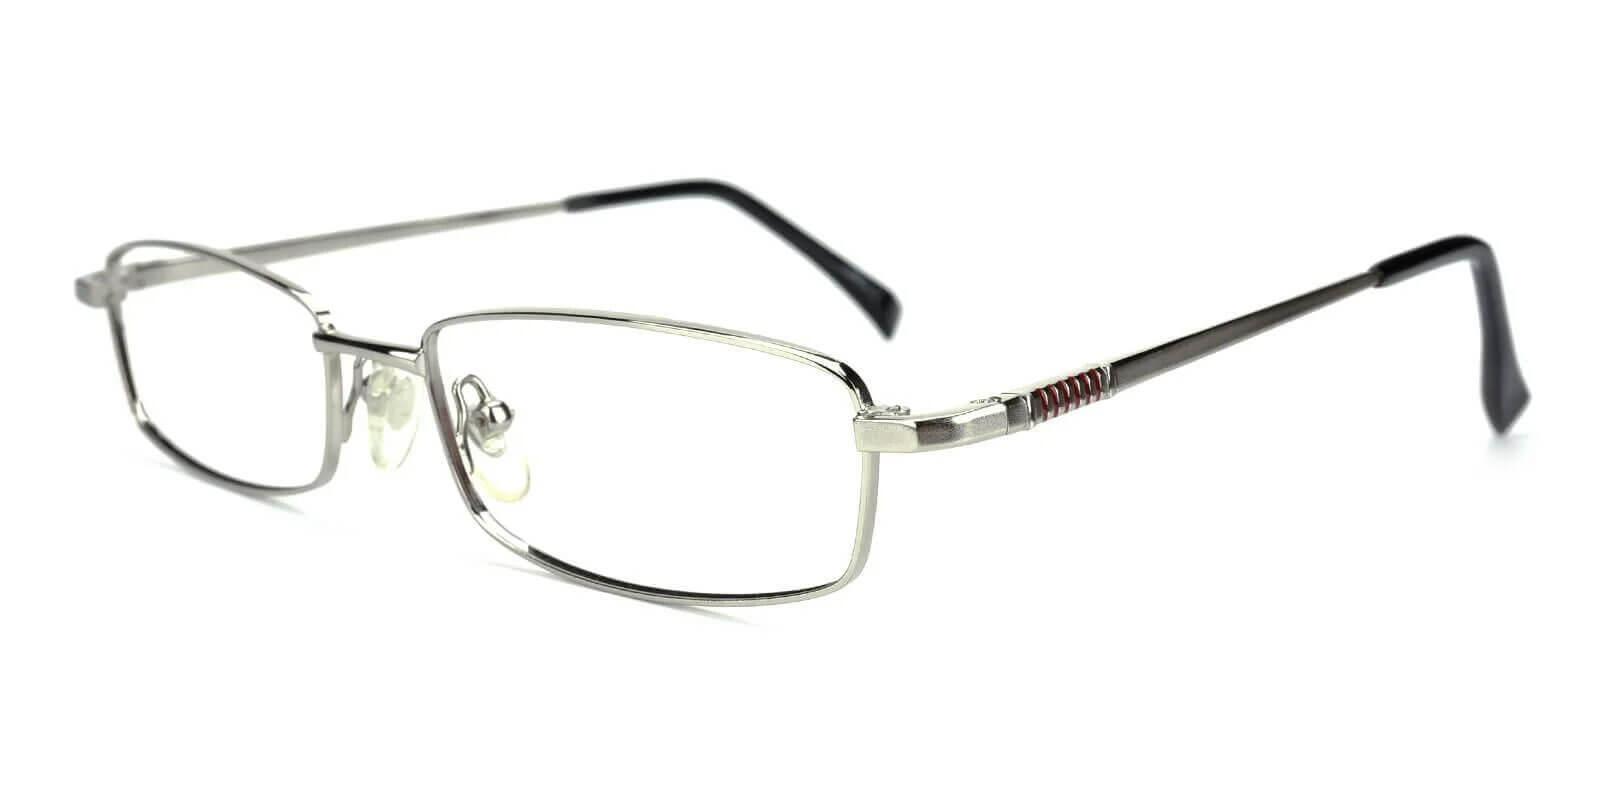 Gihon Silver Metal Eyeglasses , NosePads Frames from ABBE Glasses